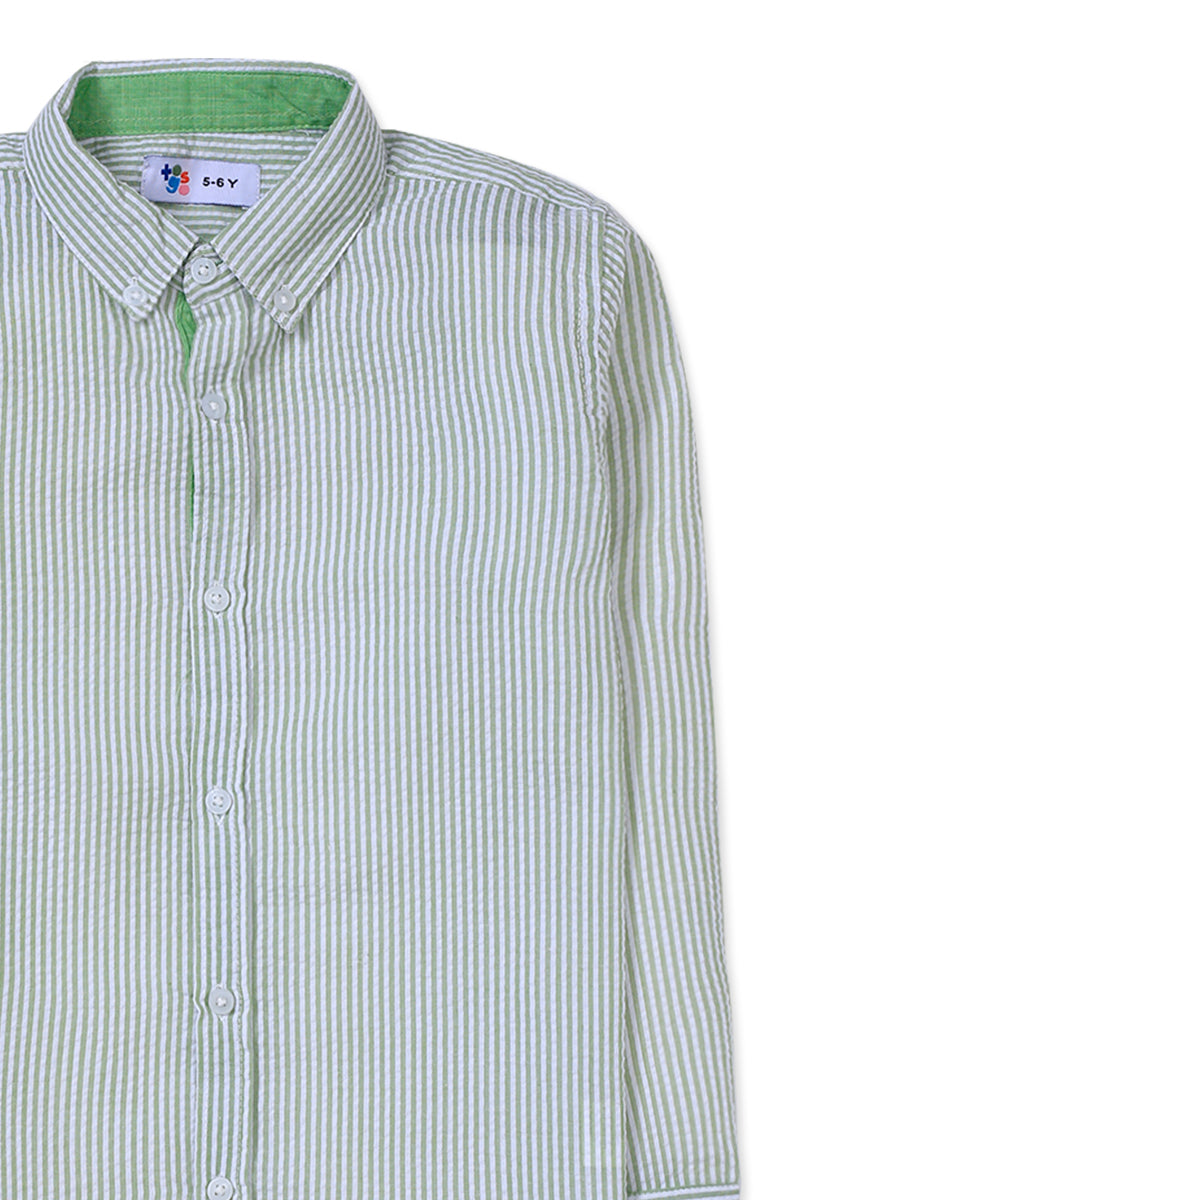 Green Cotton lined shirt